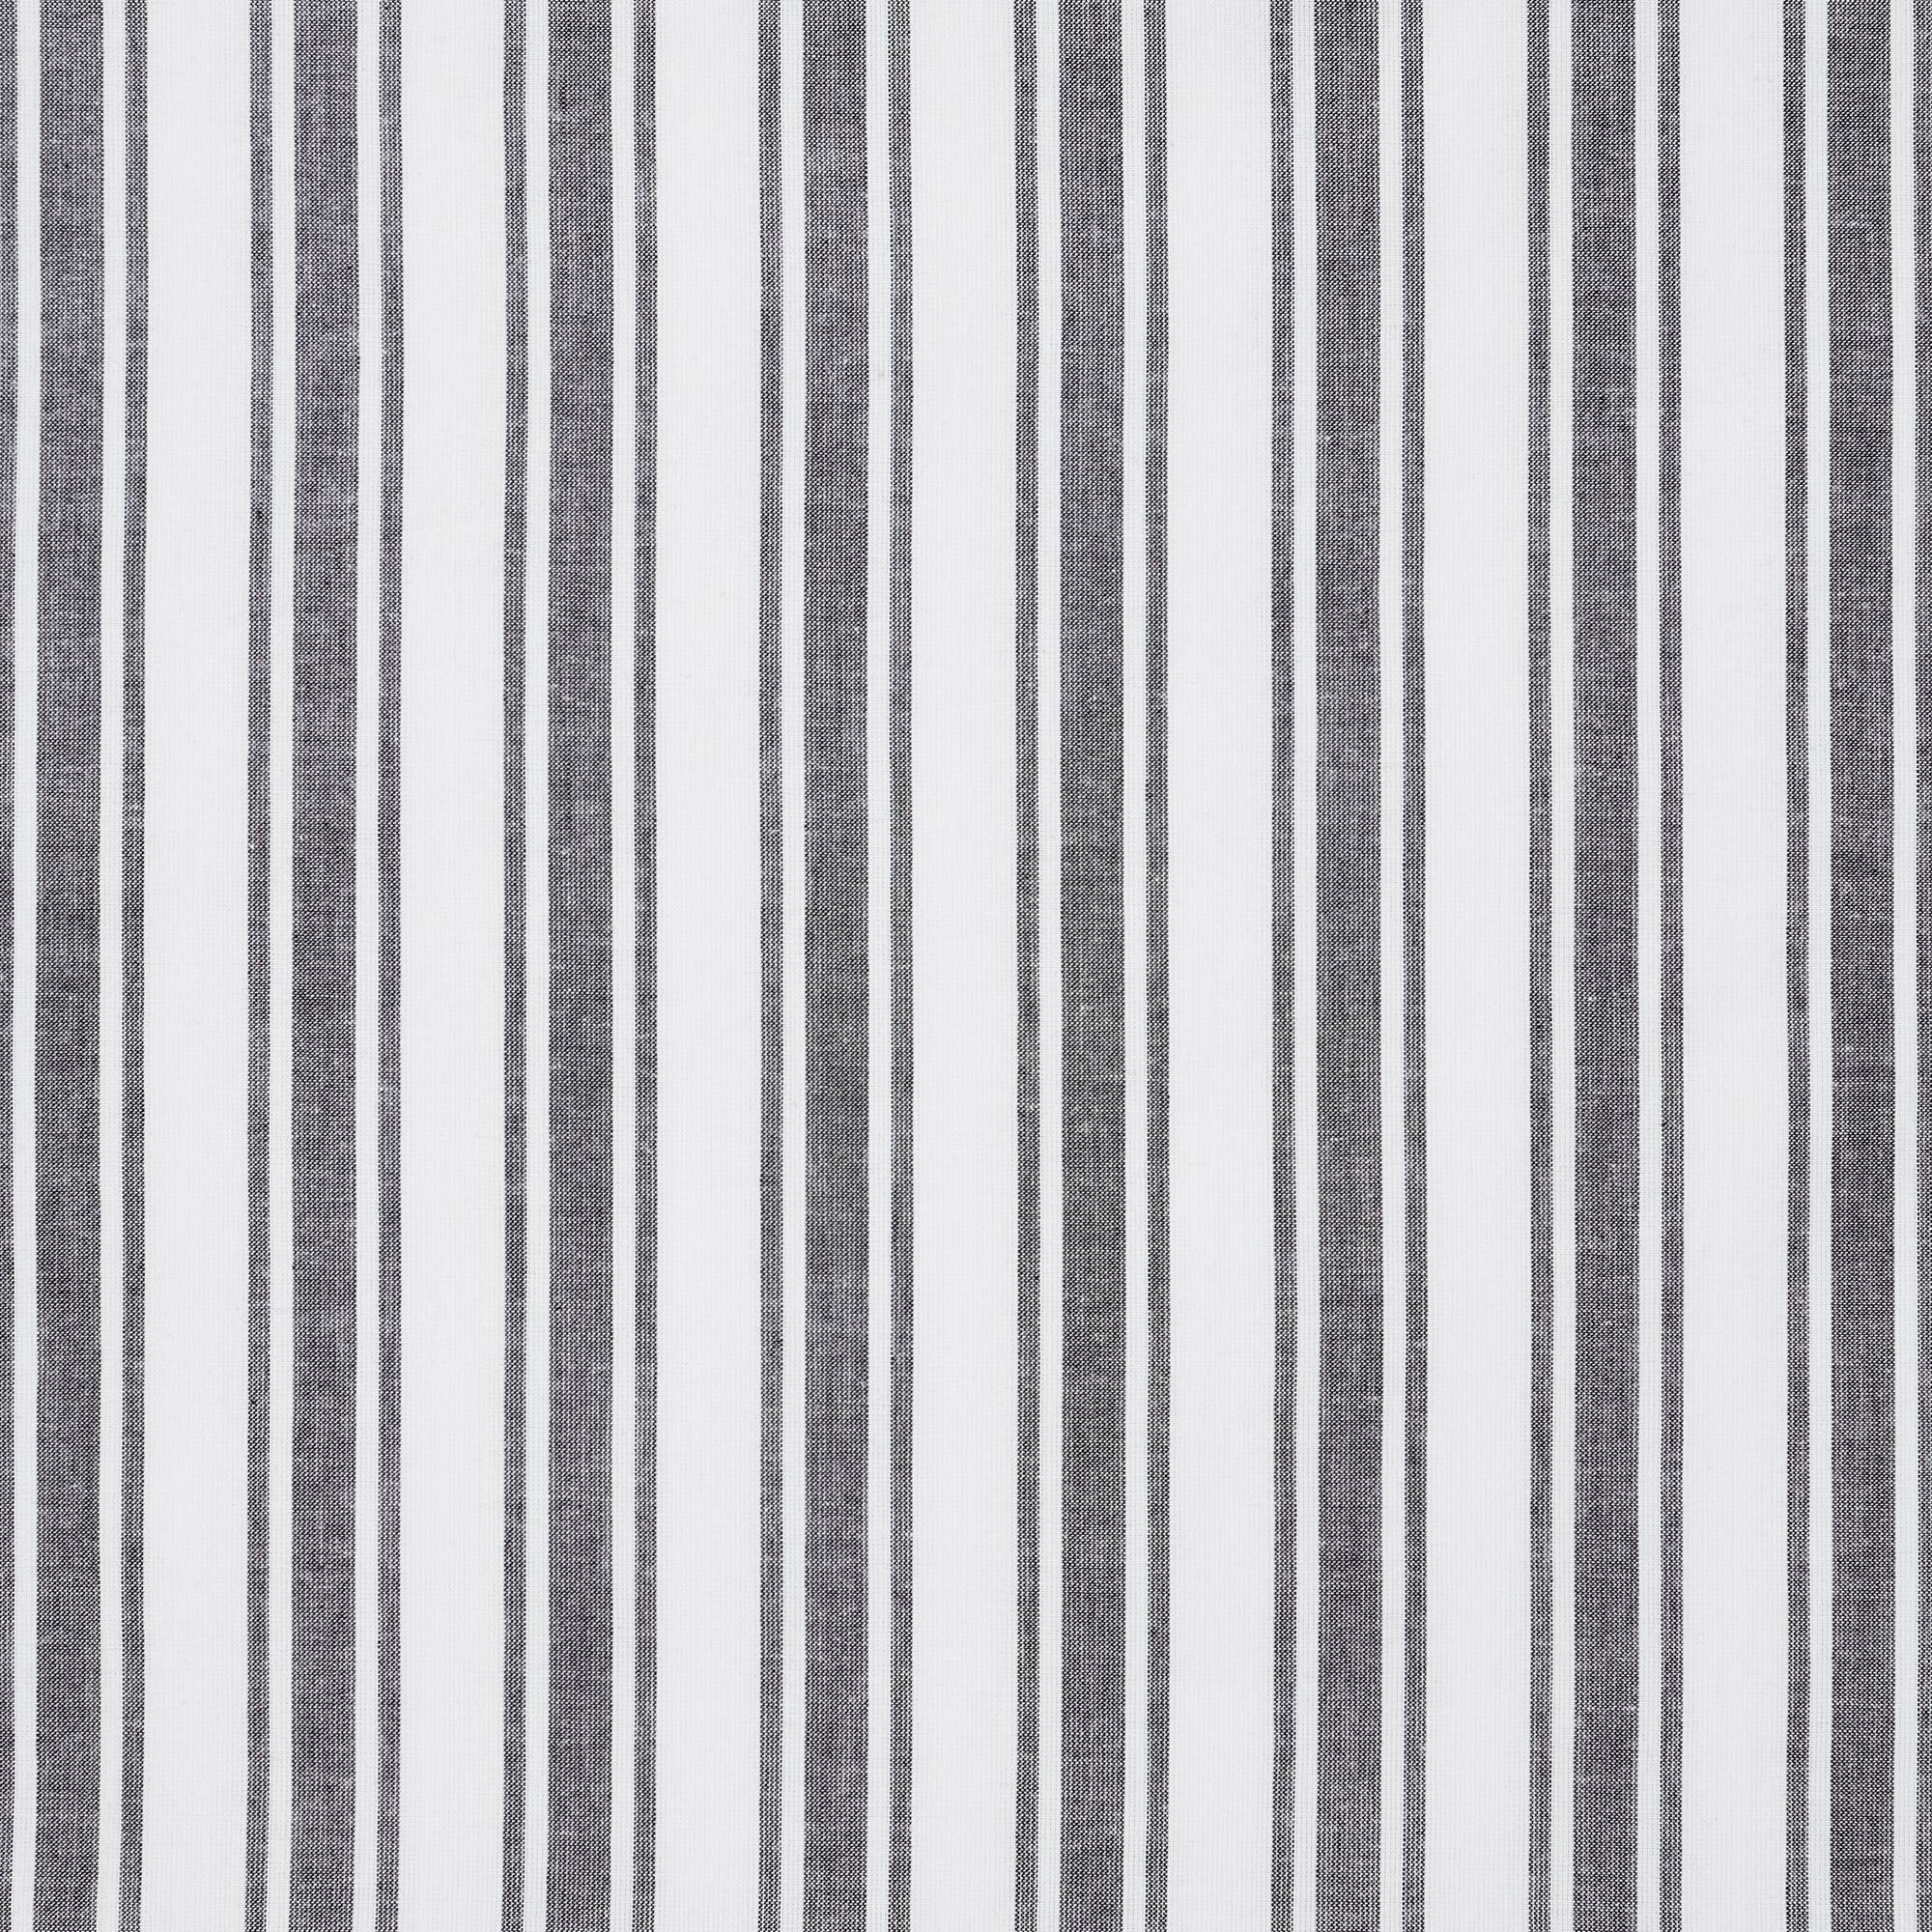 Sawyer Mill Black Ticking Stripe Prairie Long Panel Set of 2 84x36x18